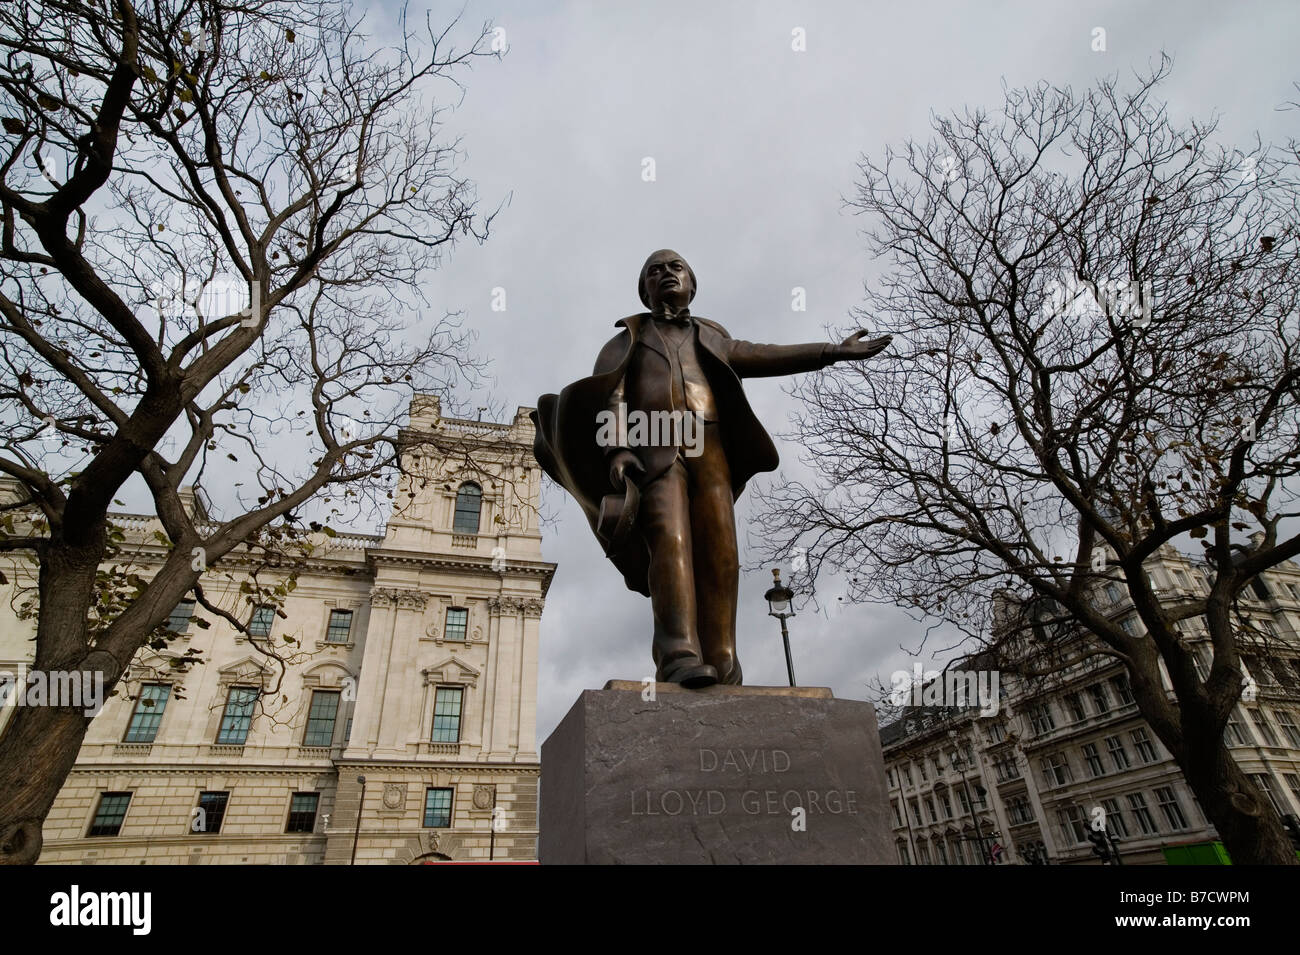 David Lloyd George statue in Parliament Square London Britain  2008 Stock Photo